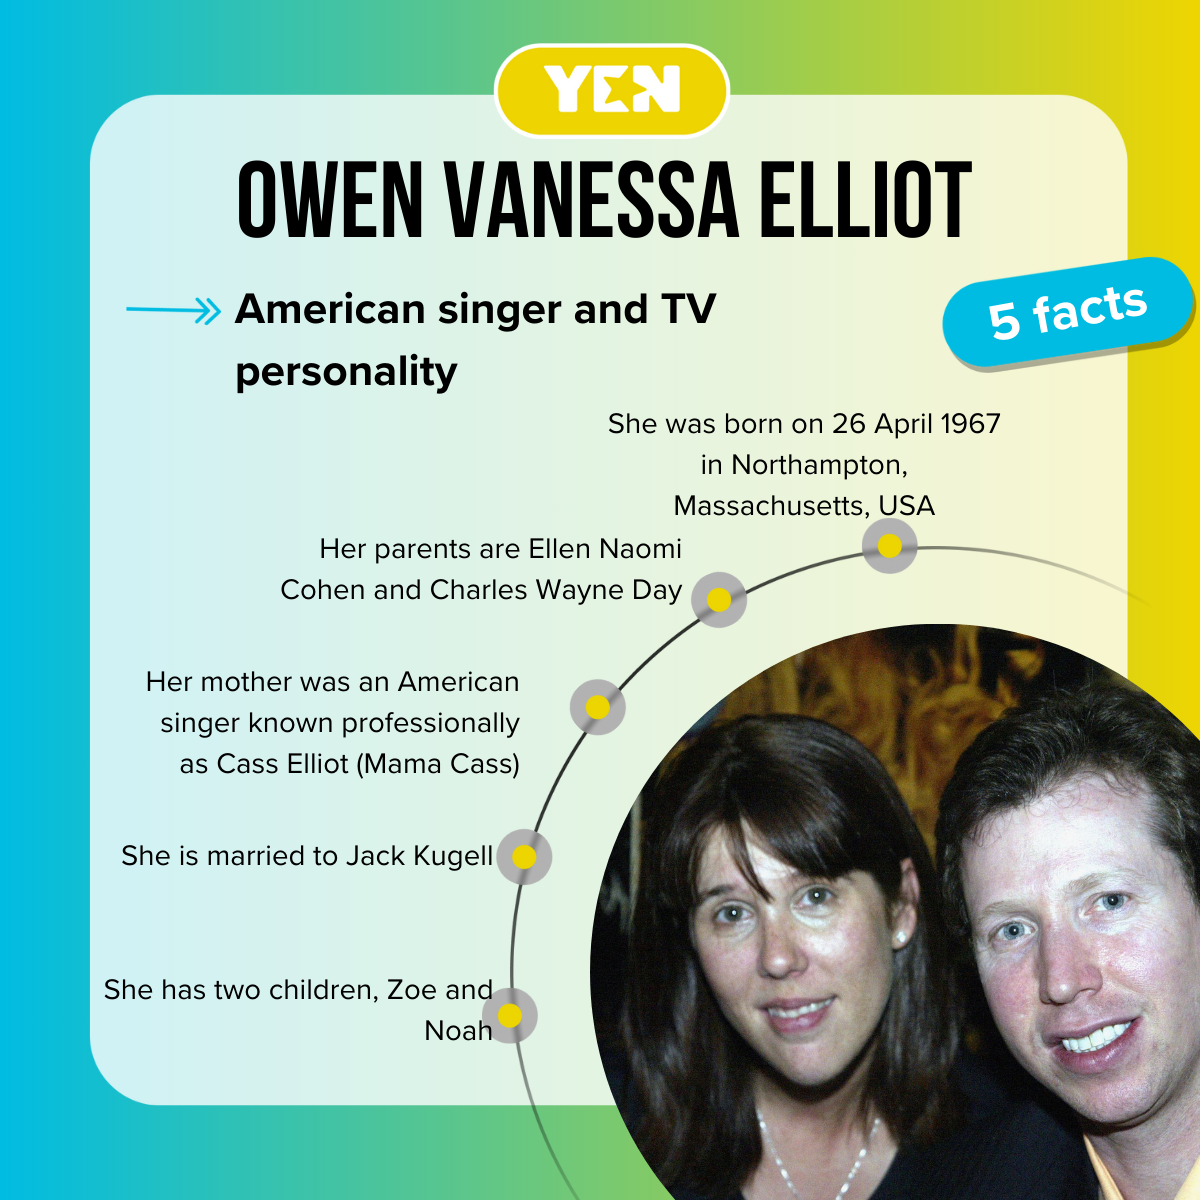 Top 5 facts about Owen Vanessa Elliot